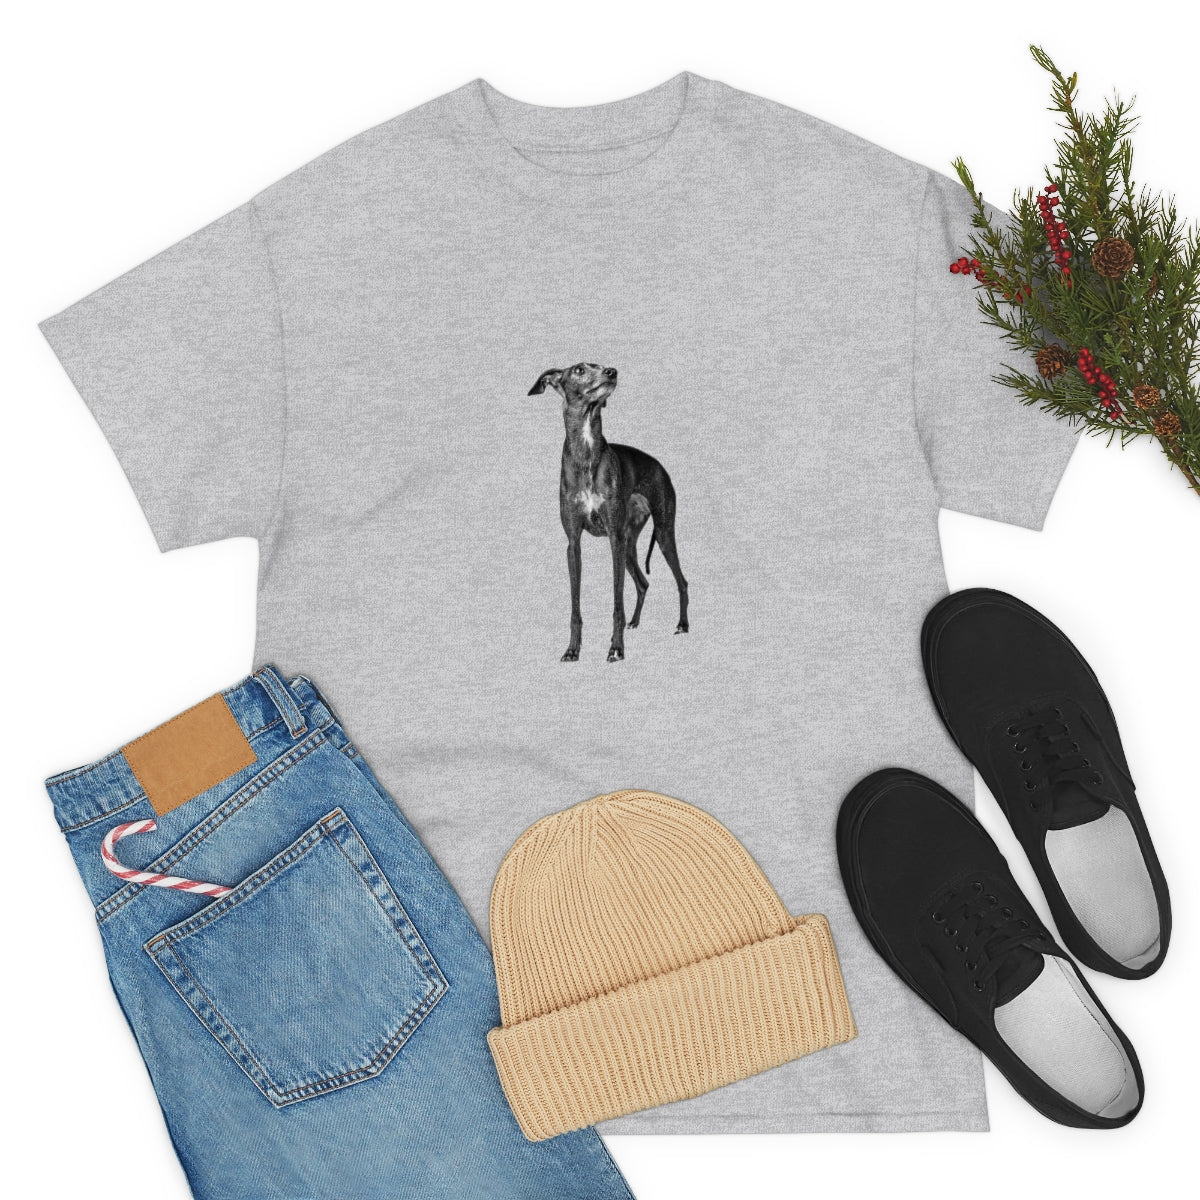 Dog Tshirt, Dog Mom Shirt, Dog Lover Shirt, Dog Mom Gift, Fur Mama Shirt, Gift For Dog Lover, Dog Mama Shirt, Cute Fur Mom Gift - The Good Life Vibe